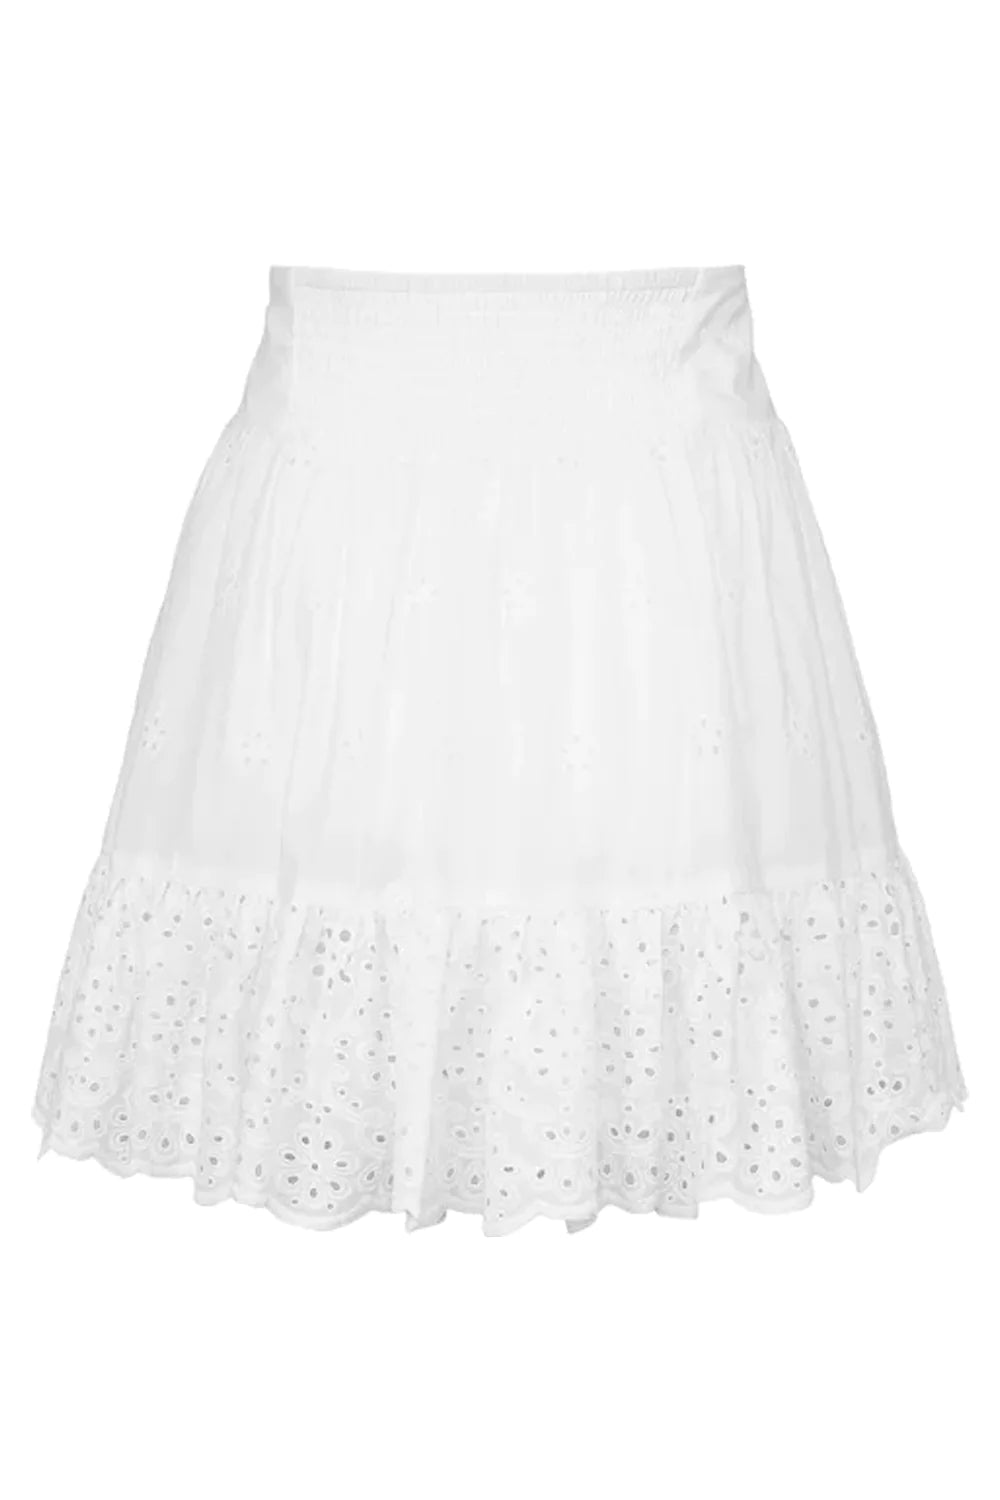 Paris Skirt - White